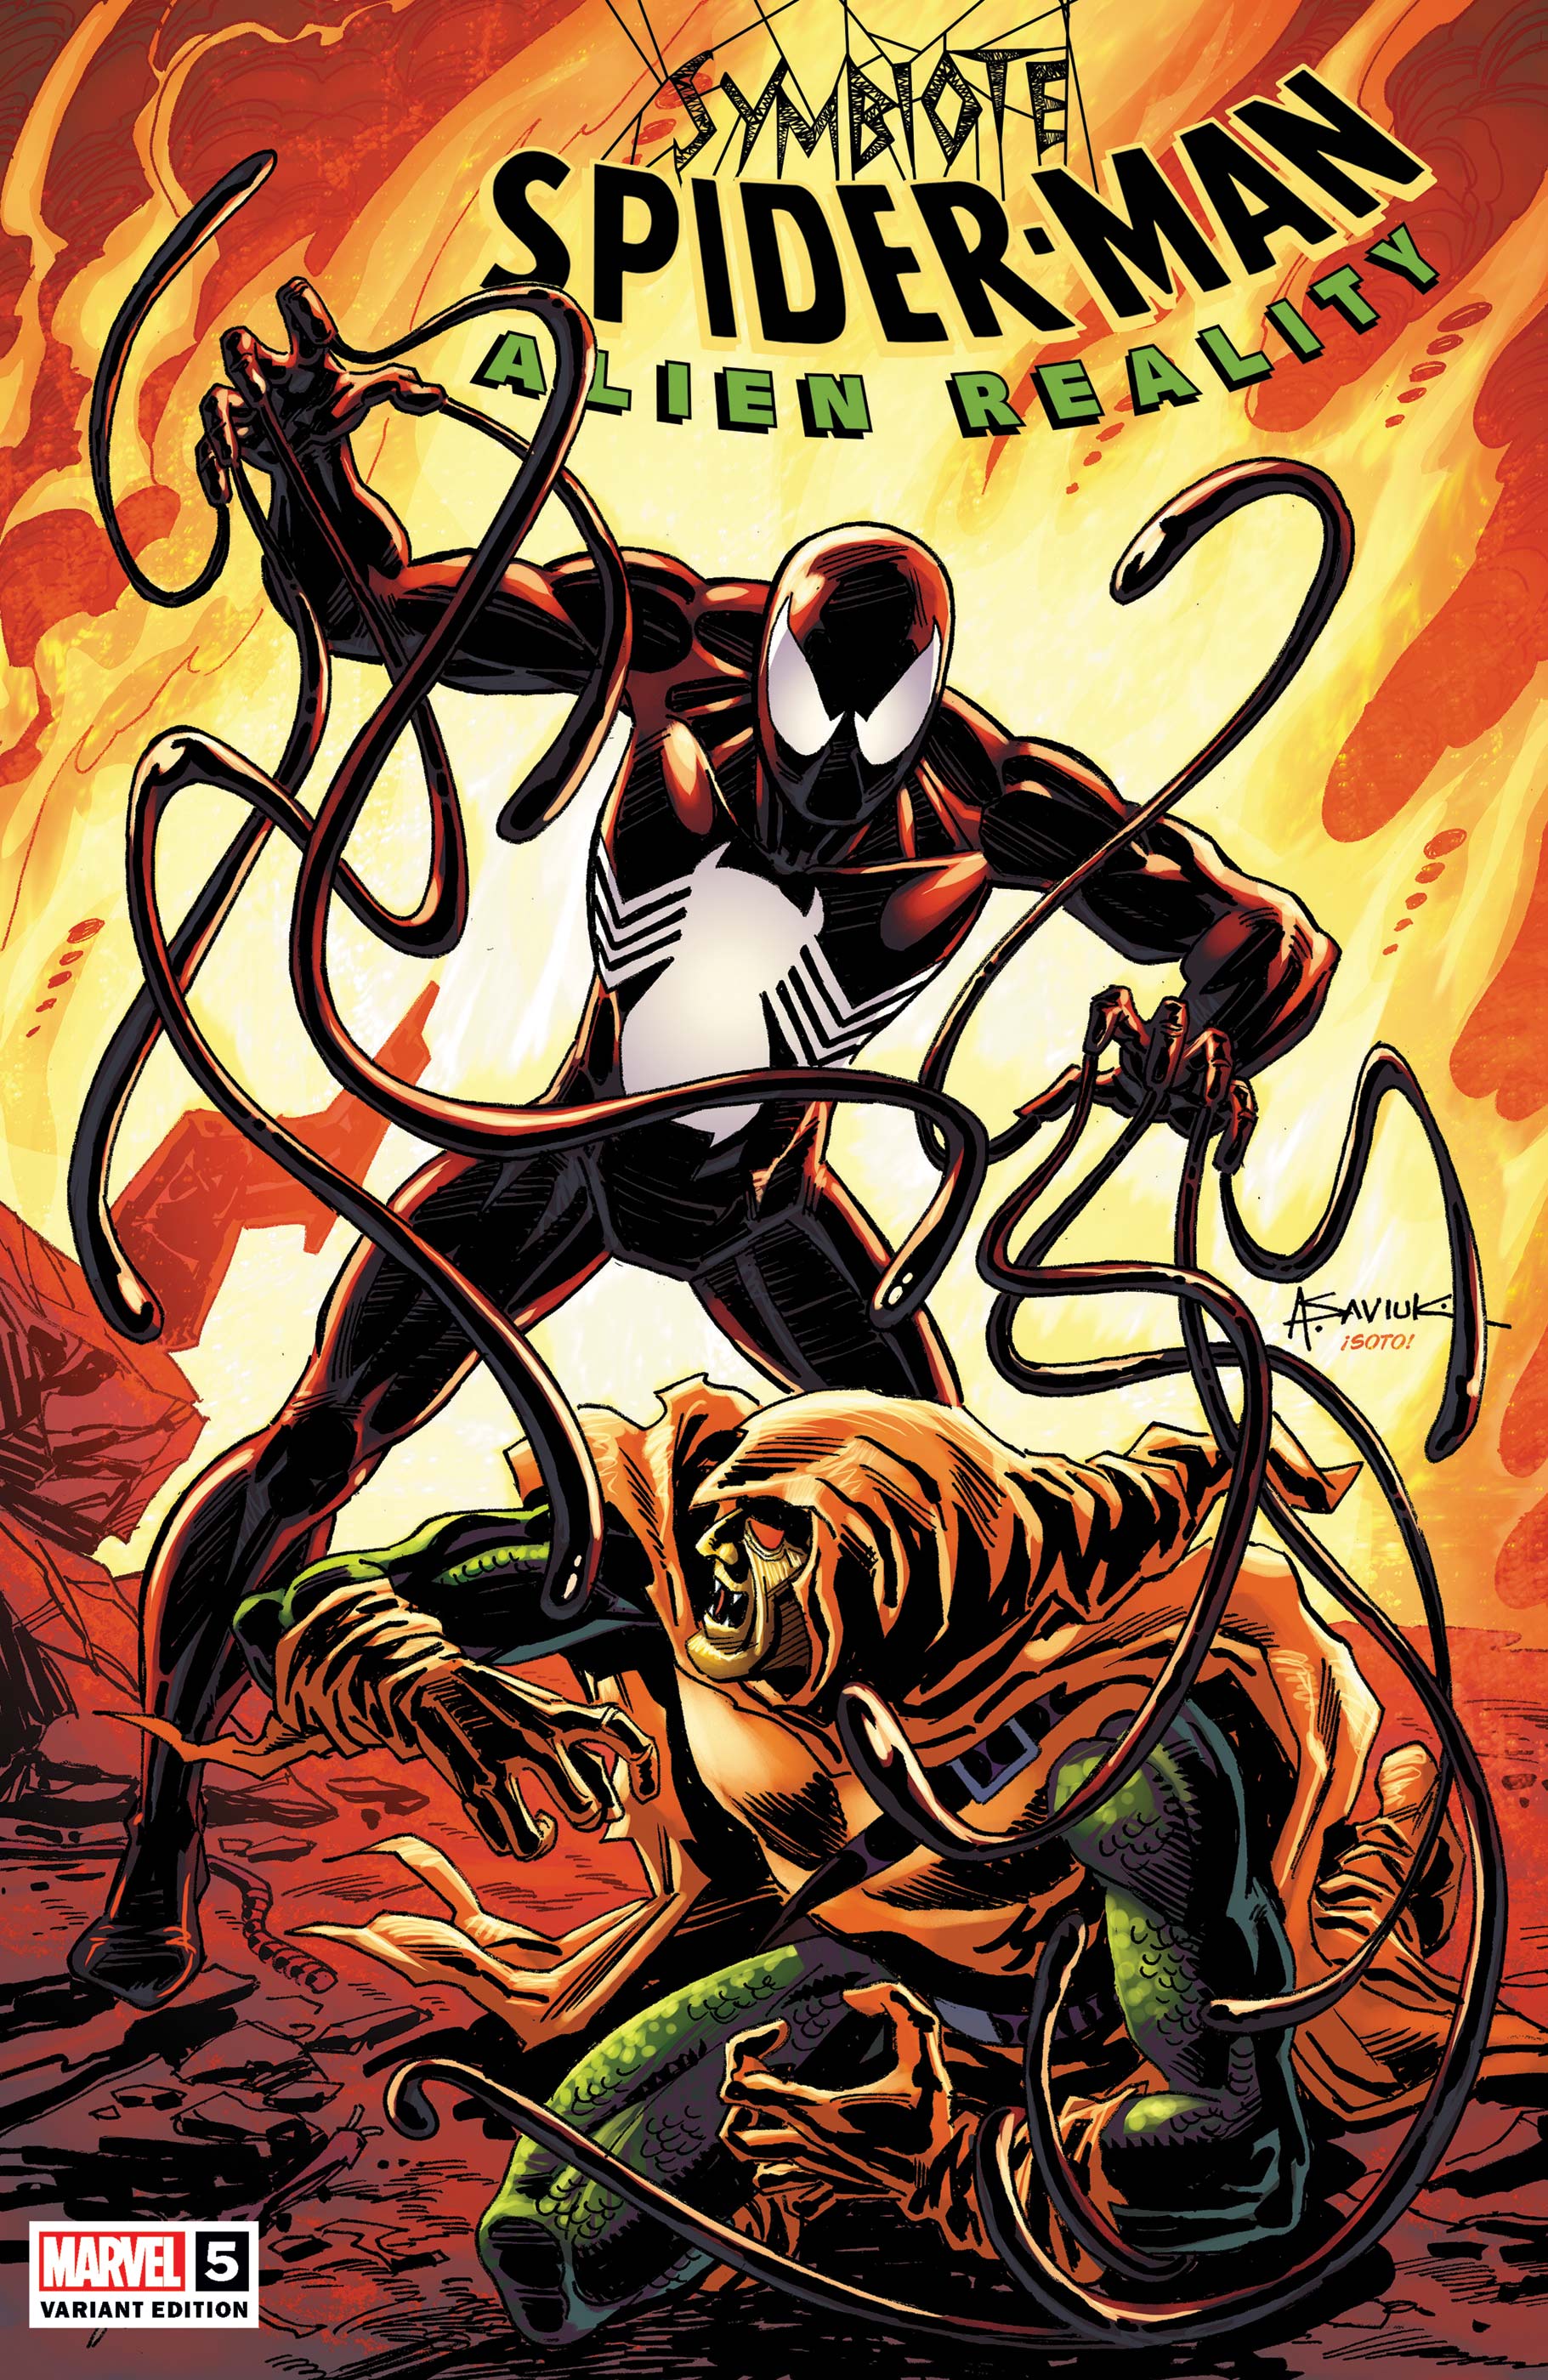 Symbiote Spider-Man: Alien Reality (2019) #5 (Variant)